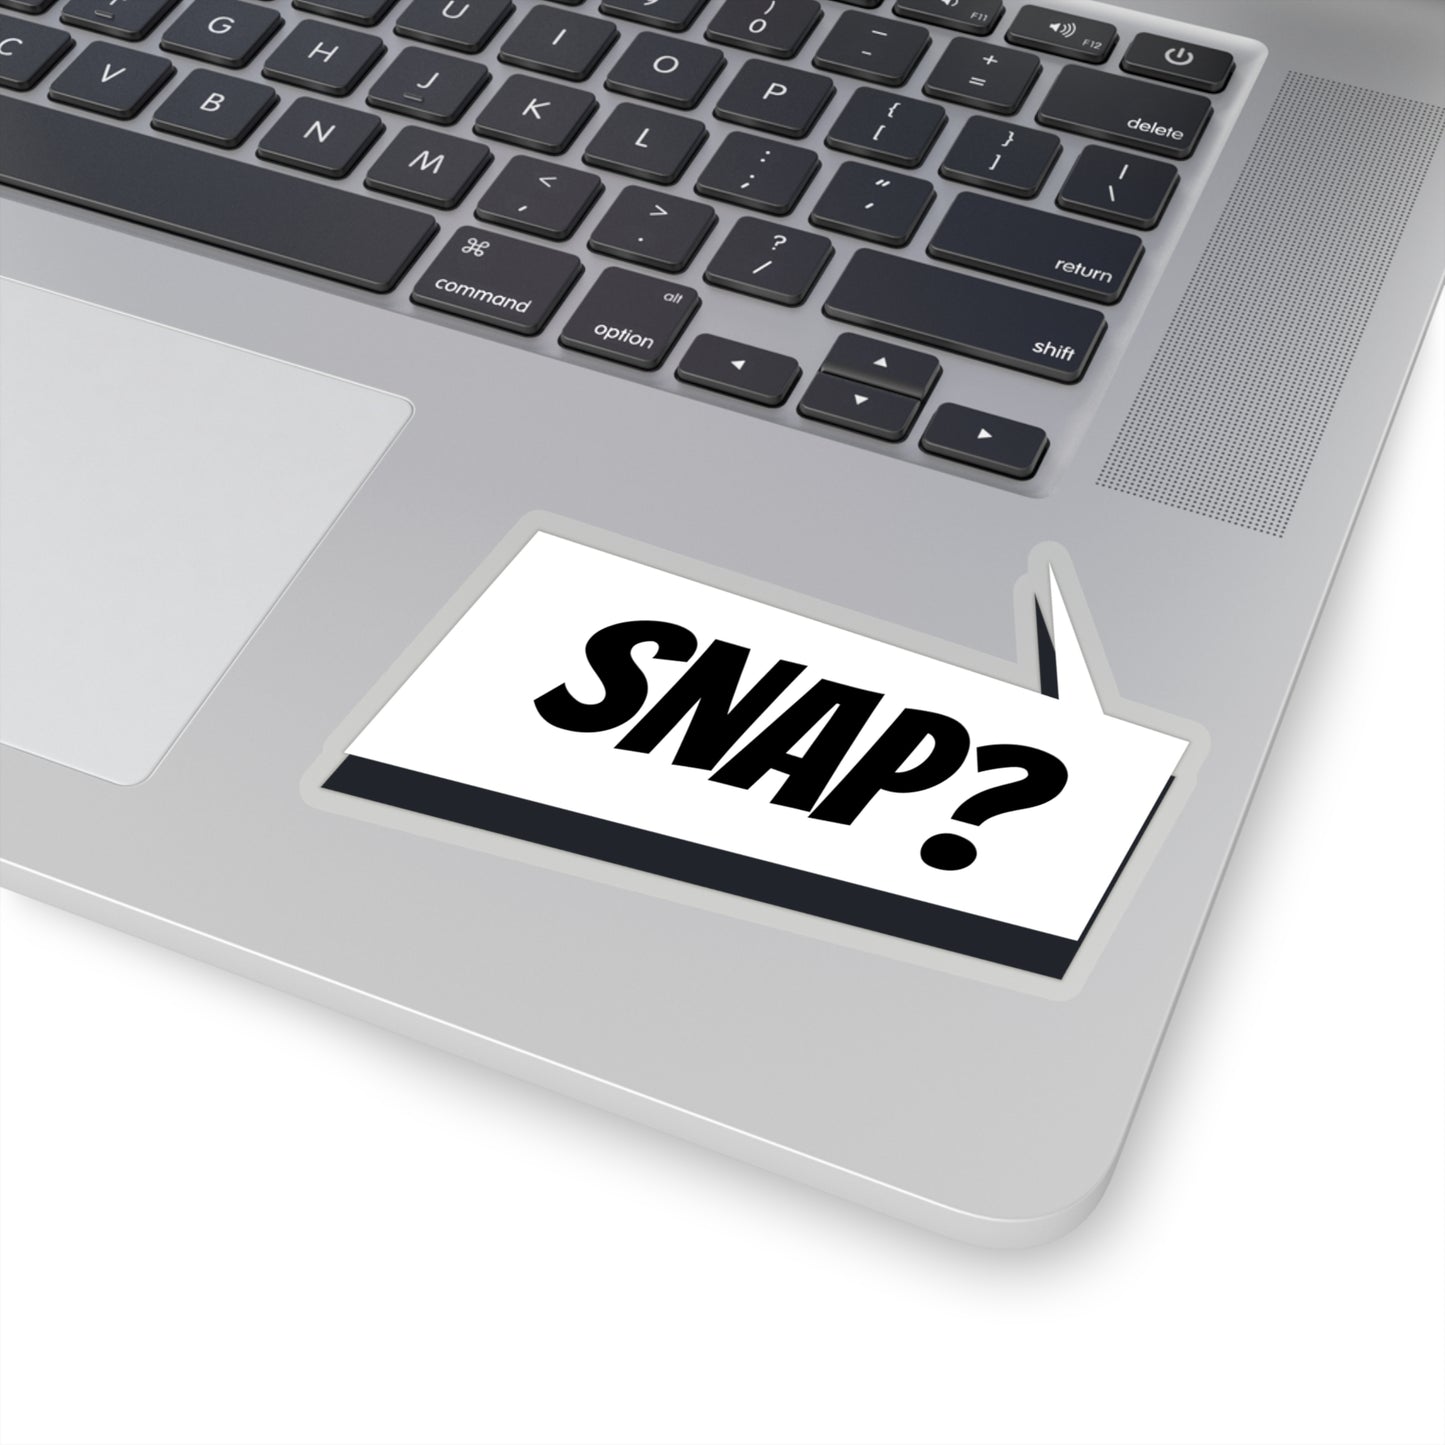 "Snap?!" Marvel Snap Kiss-Cut Stickers